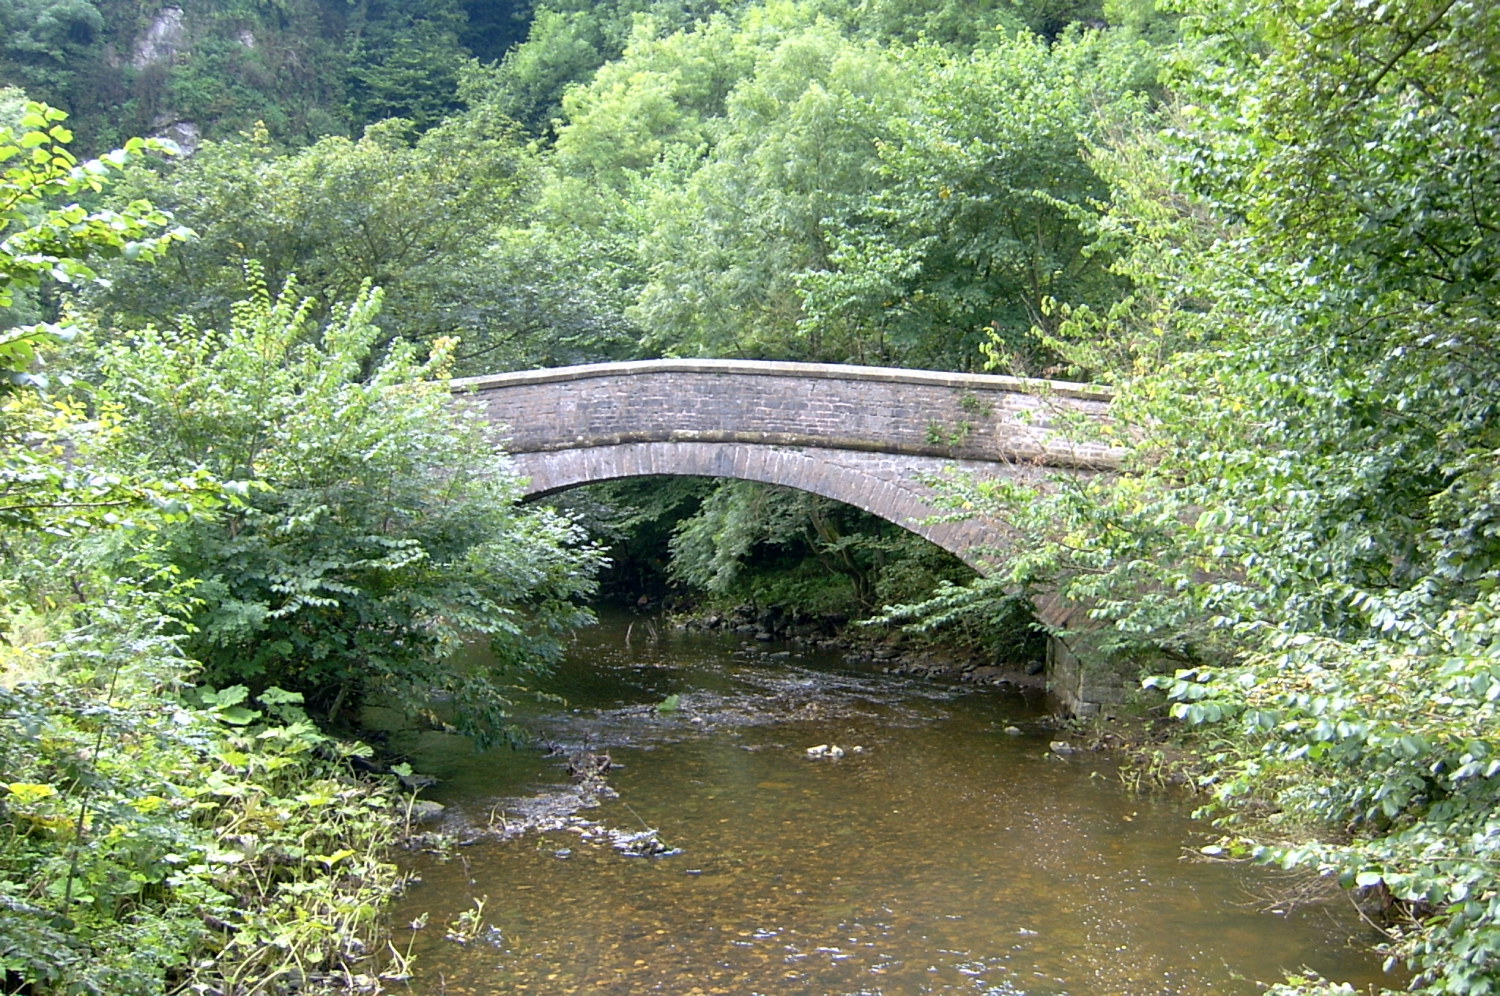 Bridge spanning the River Manifold